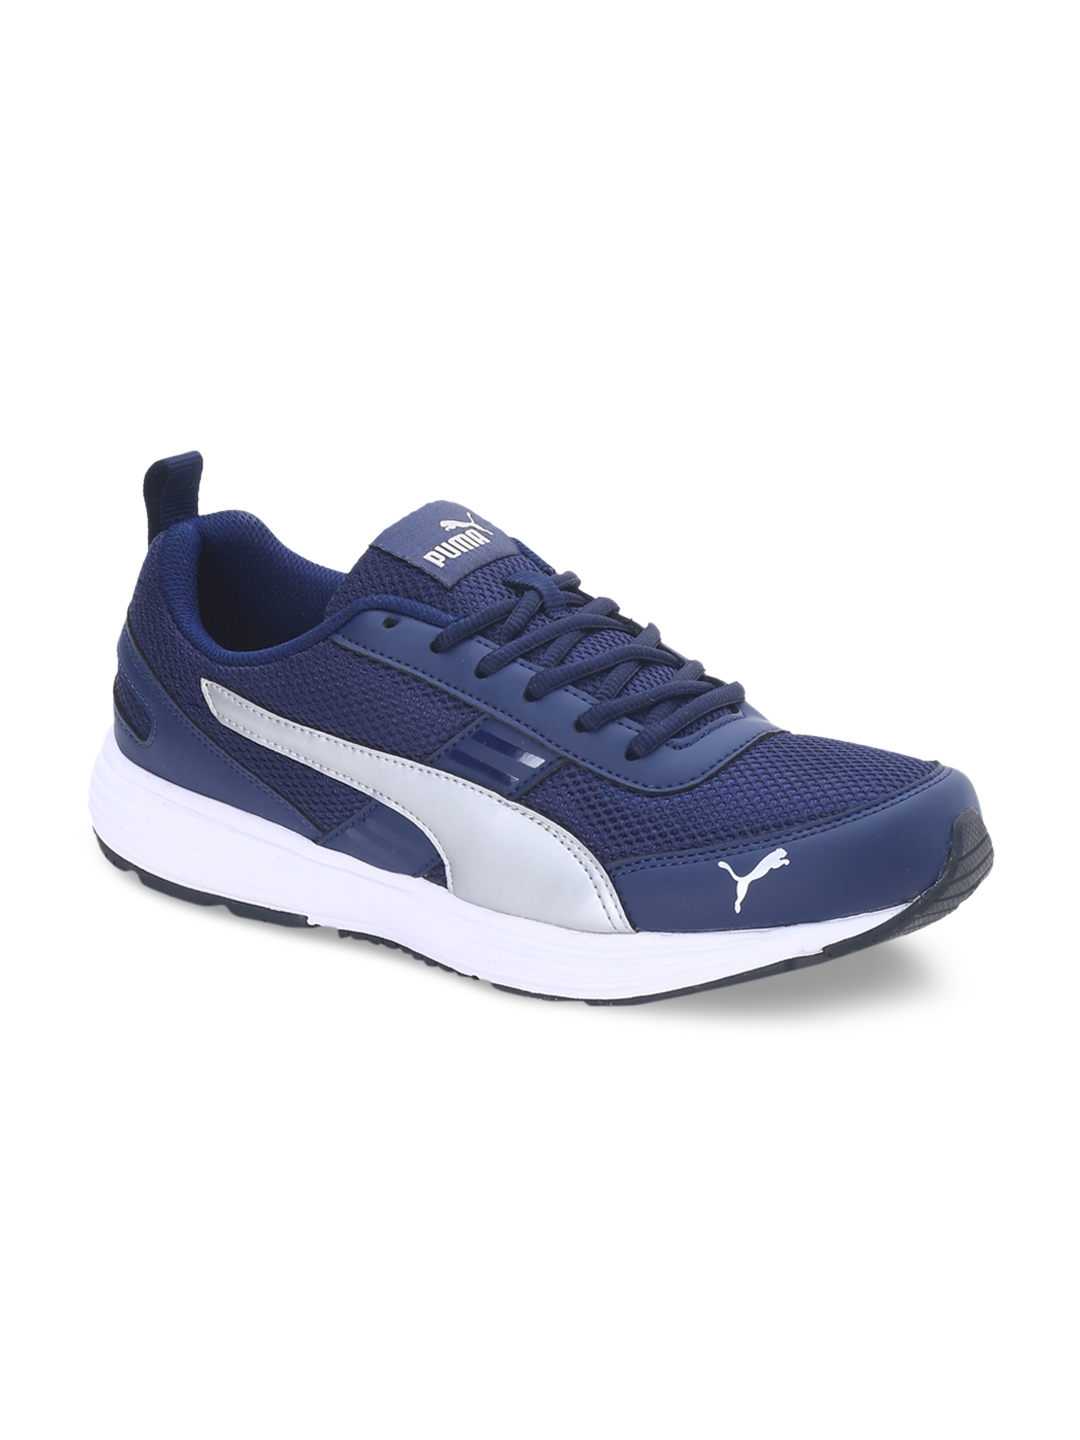 Buy Puma Men Blue Sneakers - Casual Shoes for Men 8025795 | Myntra